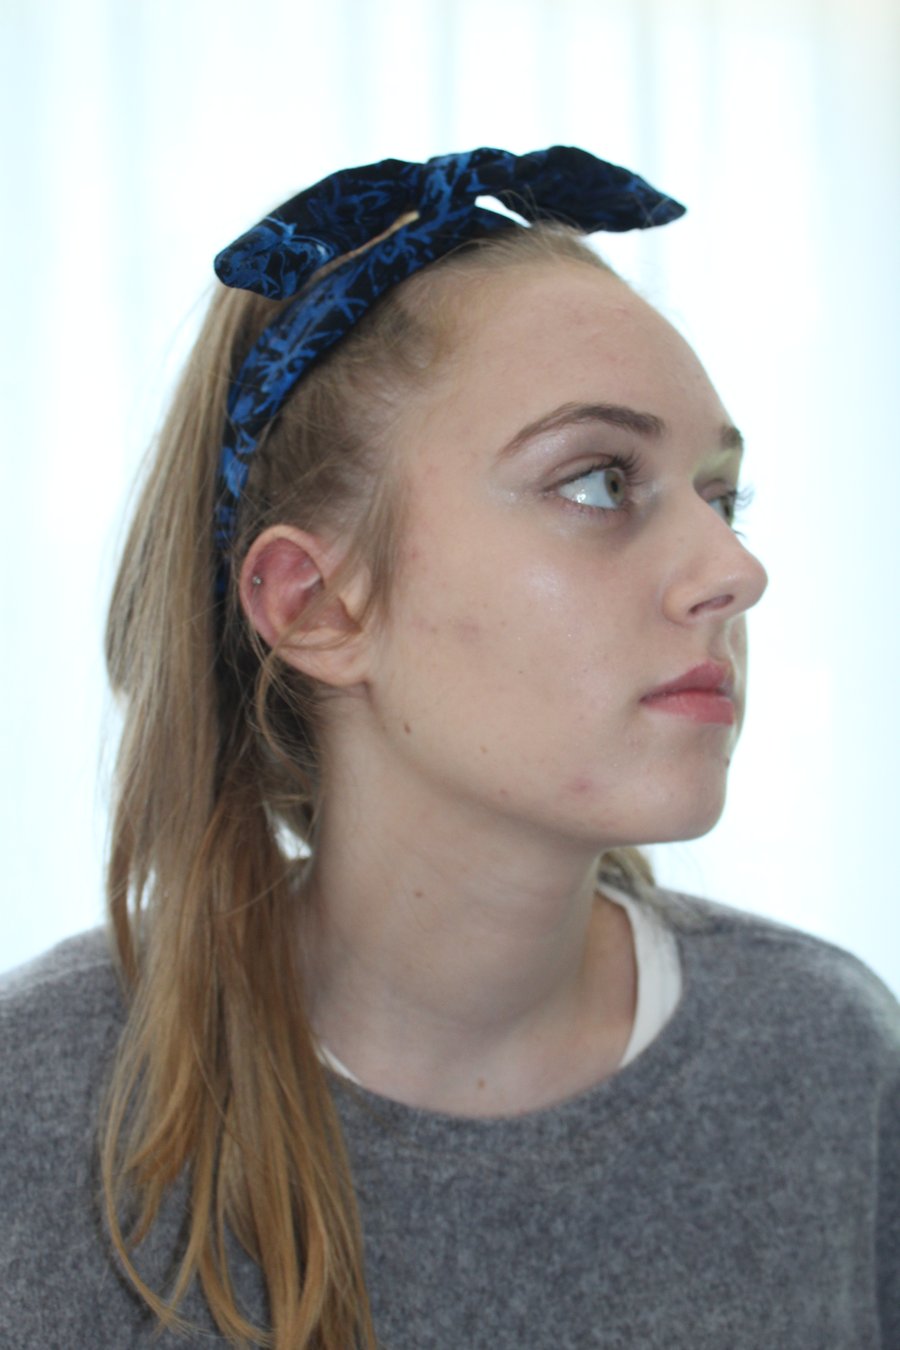 Boho wired head band,hair accessory,wired head bow band,black and blue geo print